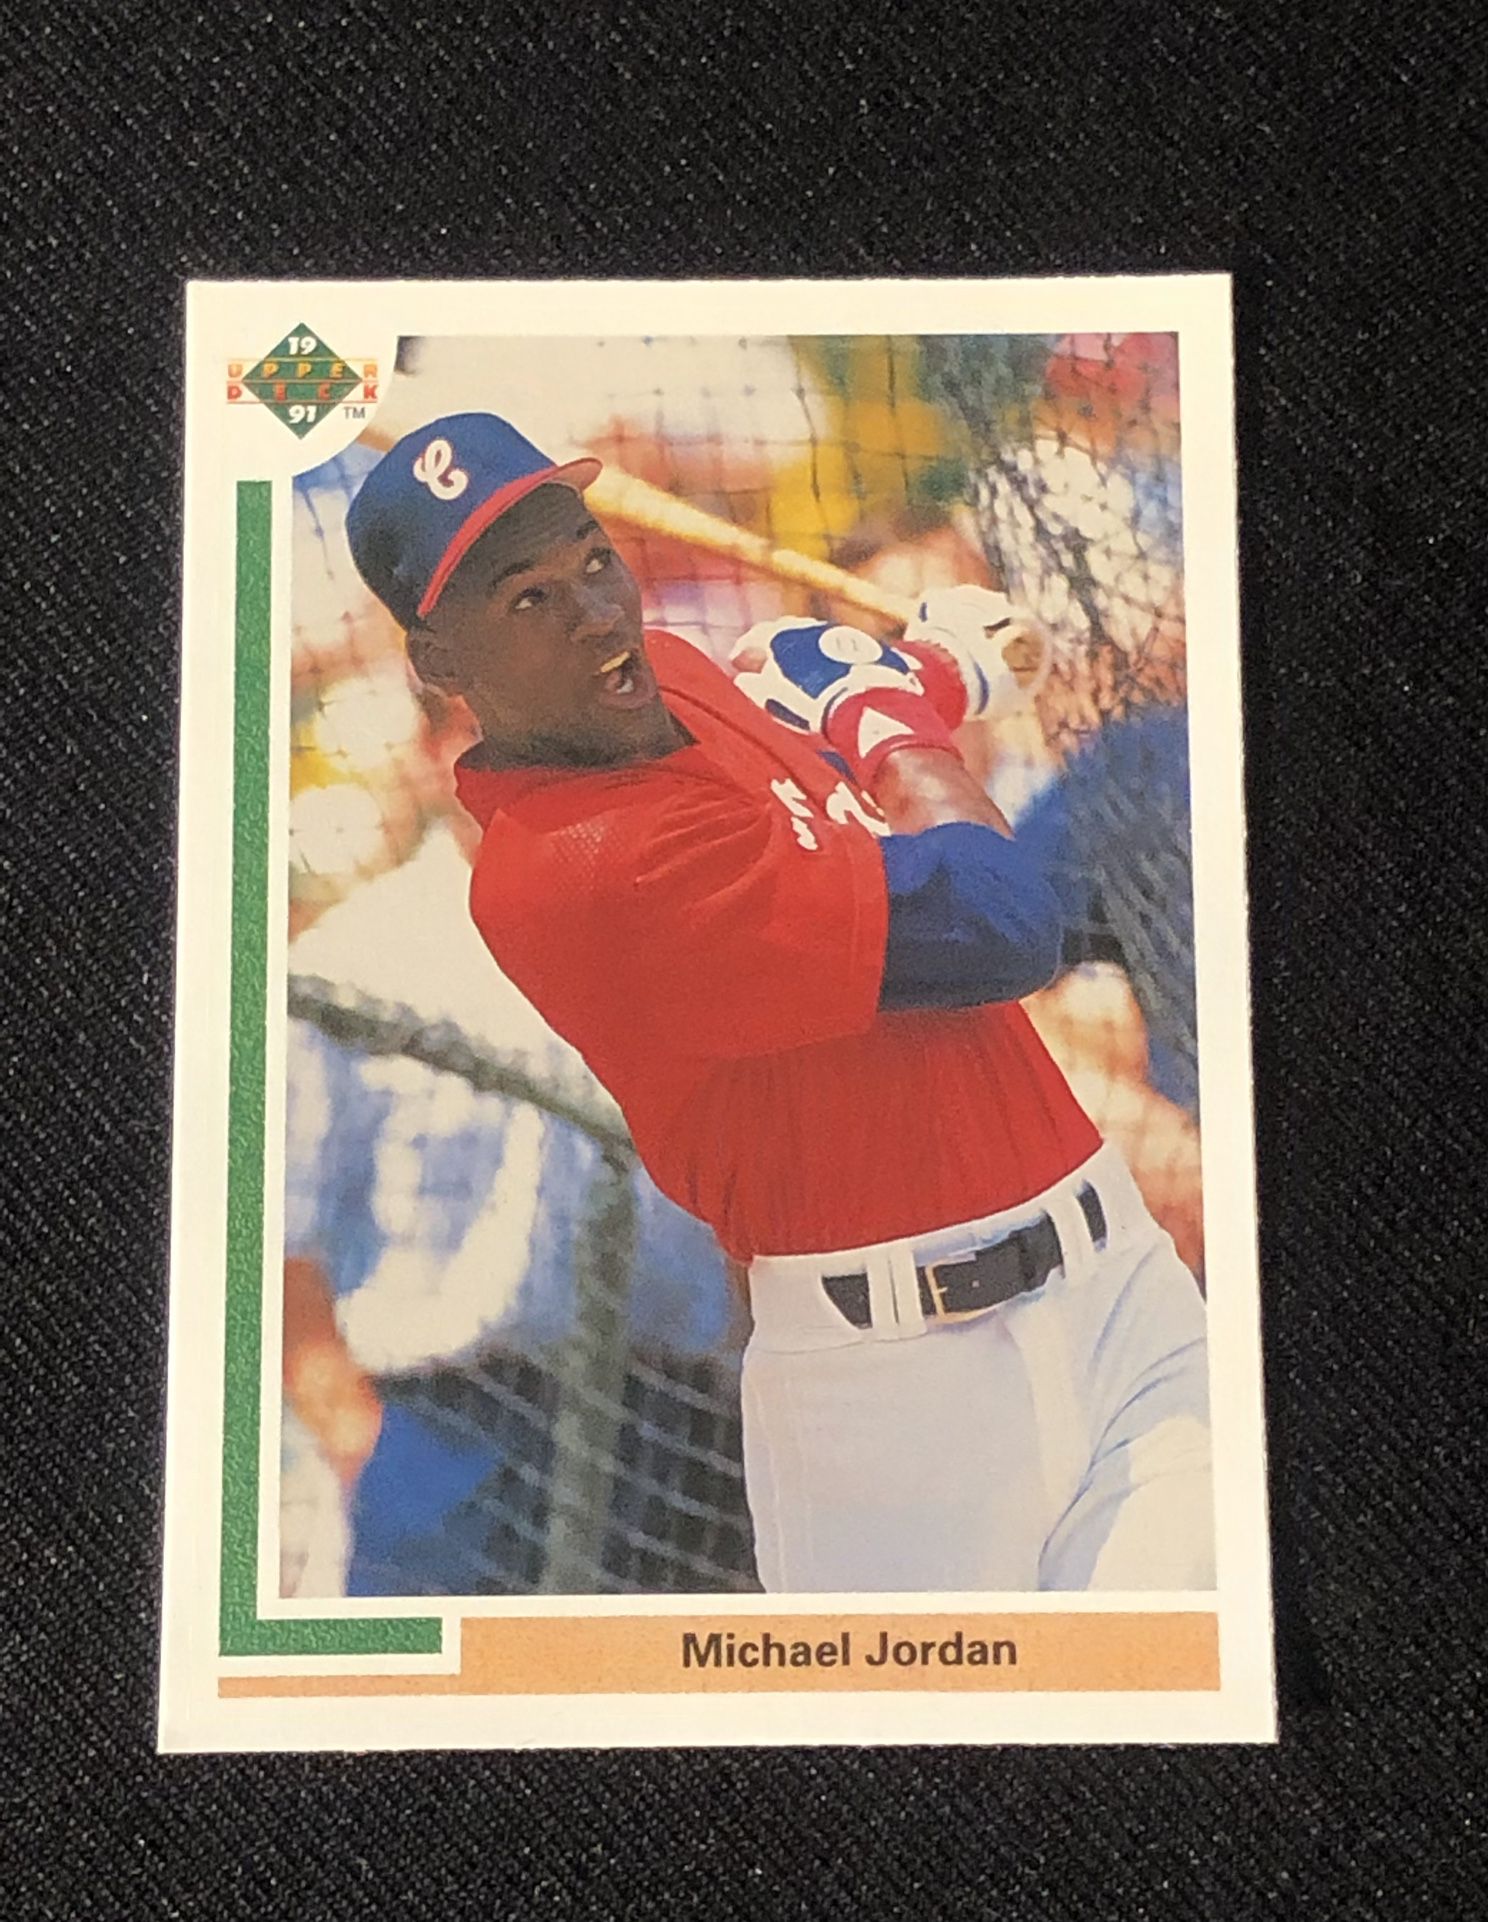 1991 Upper Deck Michael Jordan Baseball Card SP1 Chicago White Sox